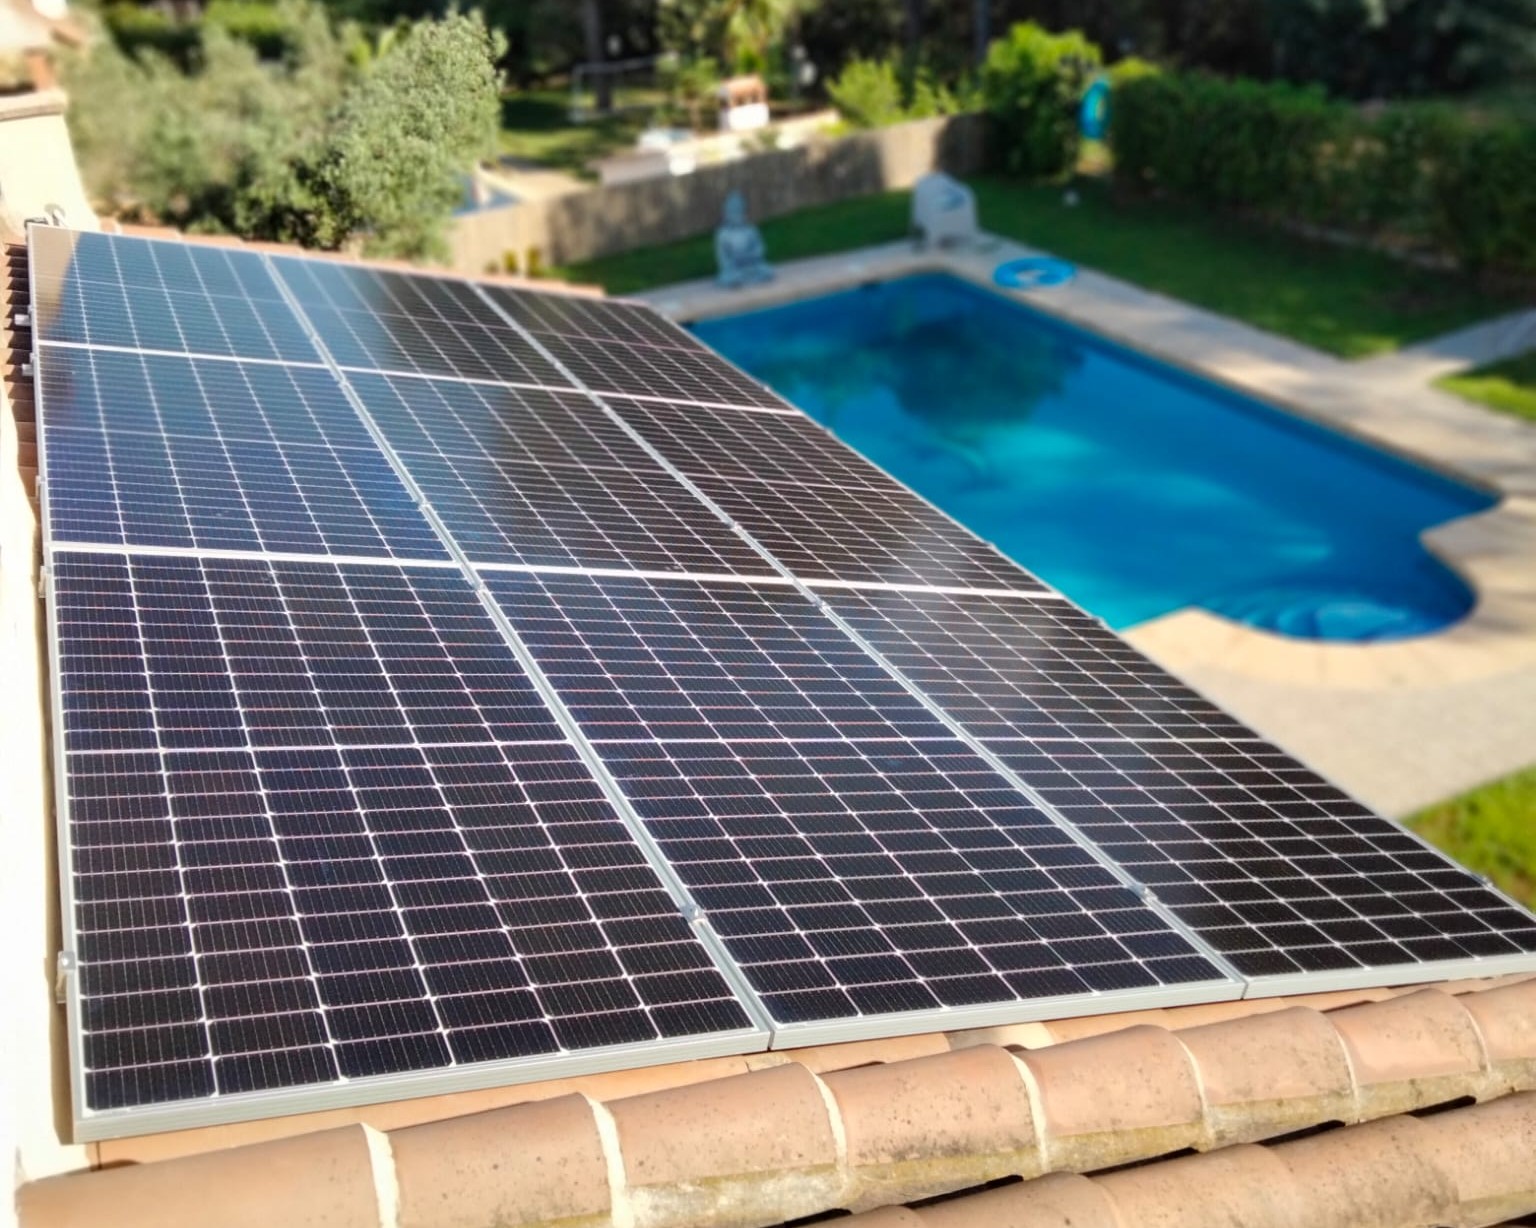 9X 460 wp Solar Panels, Ador, Alicante (Hybrid system)